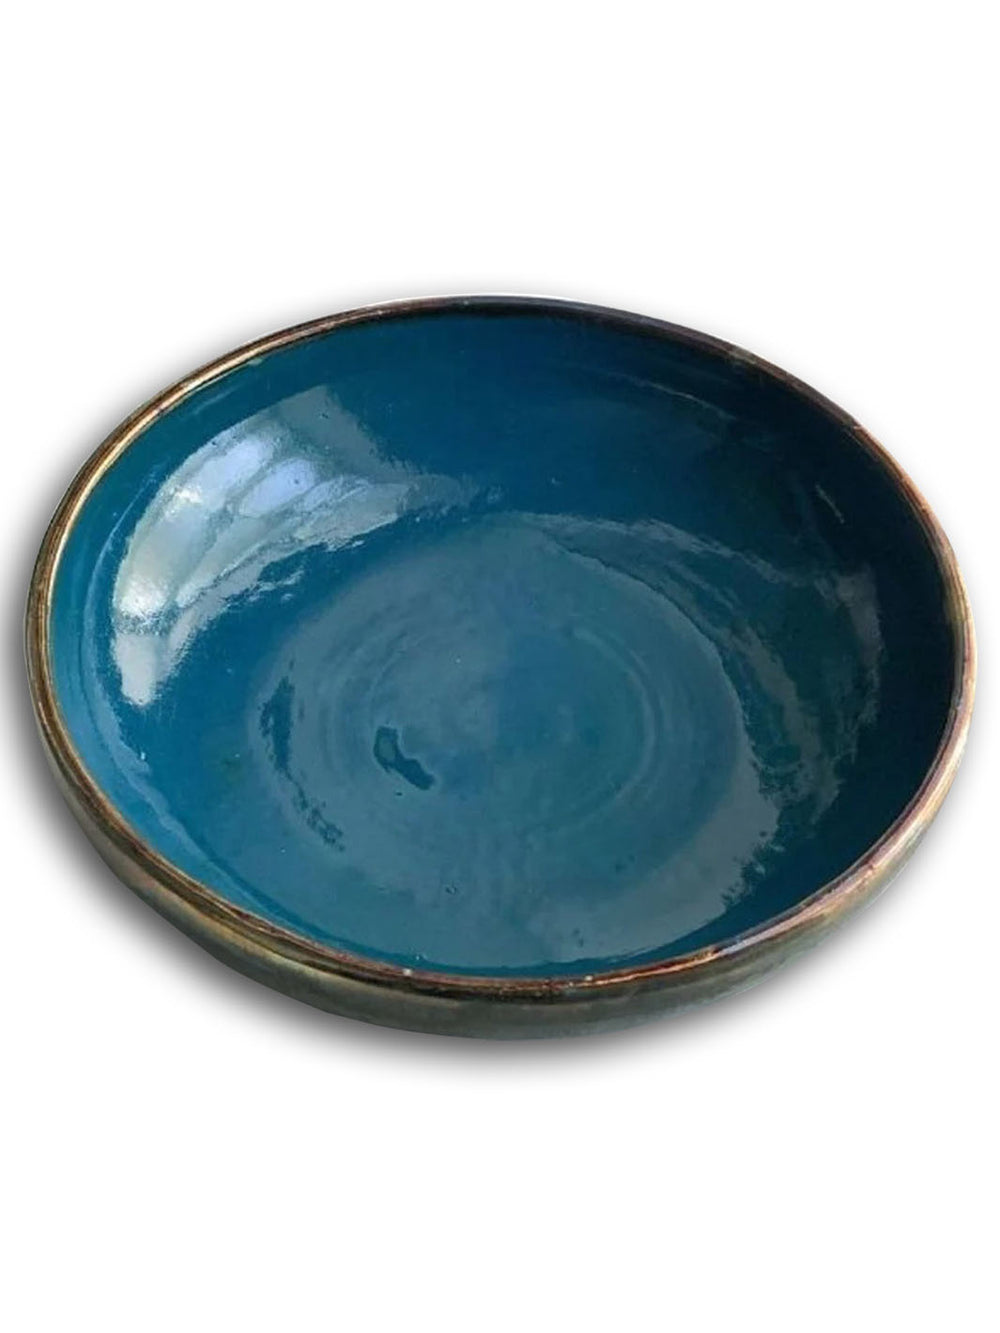 Artistic Handcrafted Peacock Art & Glamor Ceramic Pasta Bowl Deco Bowls -1